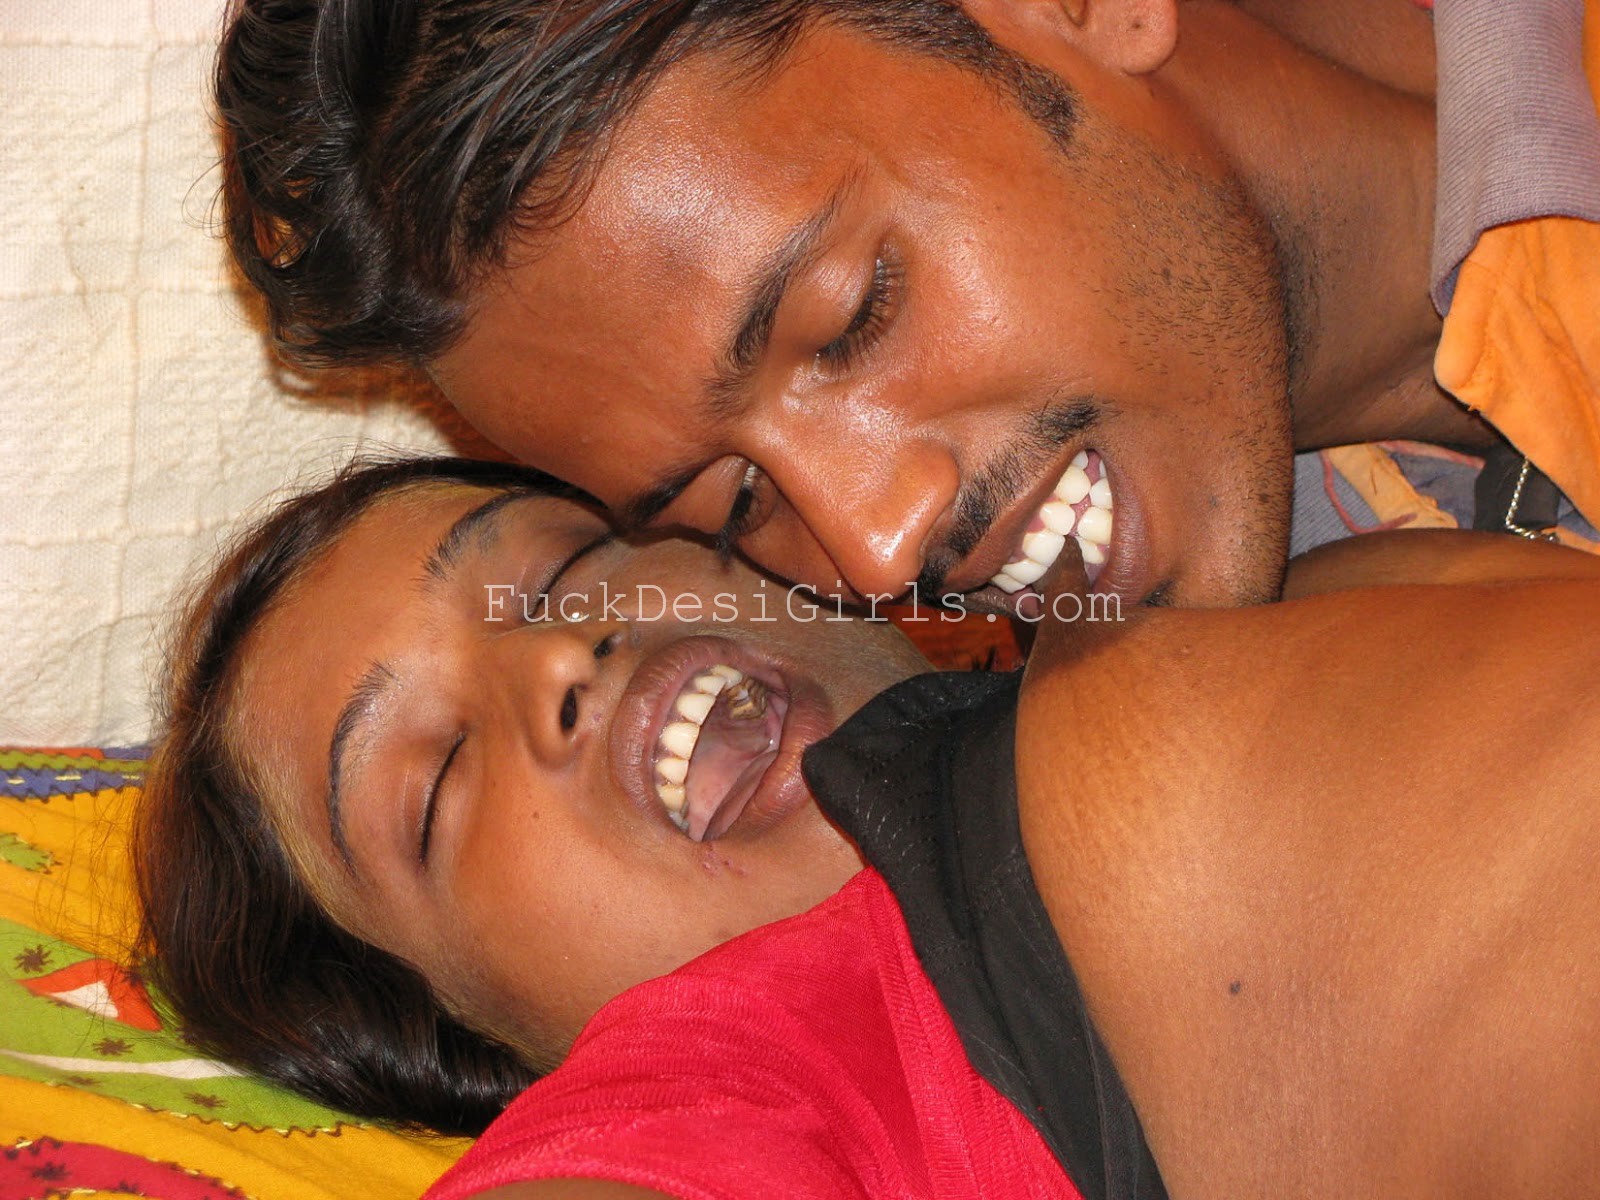 Jaipur Couple Sex Pictures Porn Xxx Latest Gallery (2) – Natural Beautiful  Desi Big Boobs Bhabhi fuck XXX pics – fuckdesigirls.com – –  FuckDesiGirls.com – 2020 Best Indian Porn XXX, Nude Indian